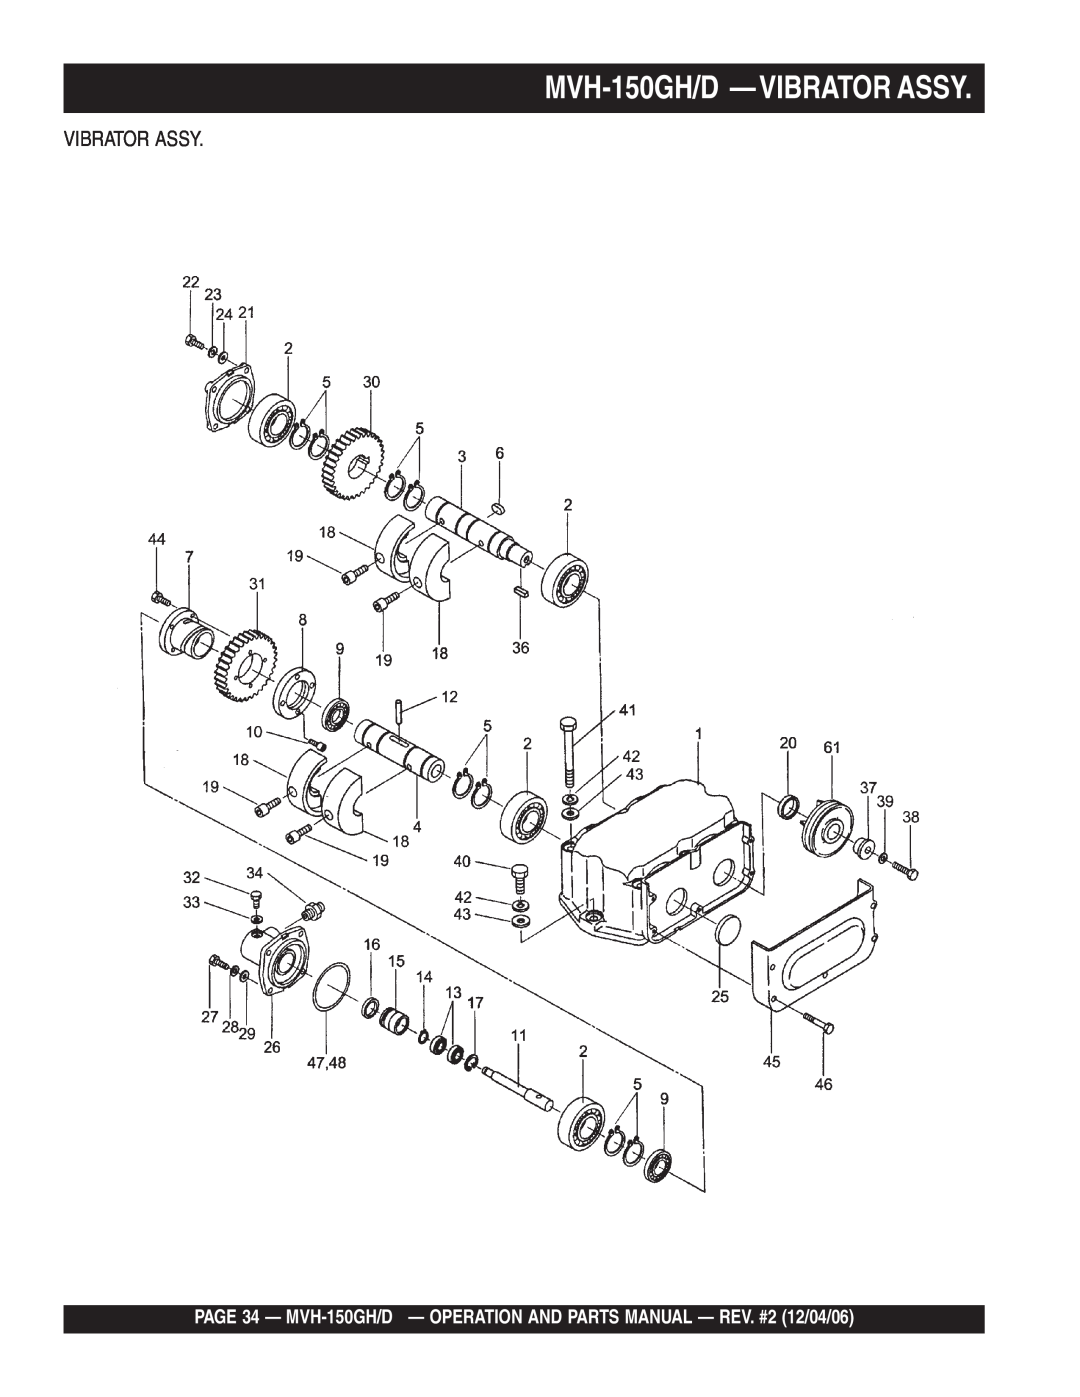 Multiquip MVH-150D manual MVH-150GH/D -VIBRATOR ASSY, Vibrator Assy 